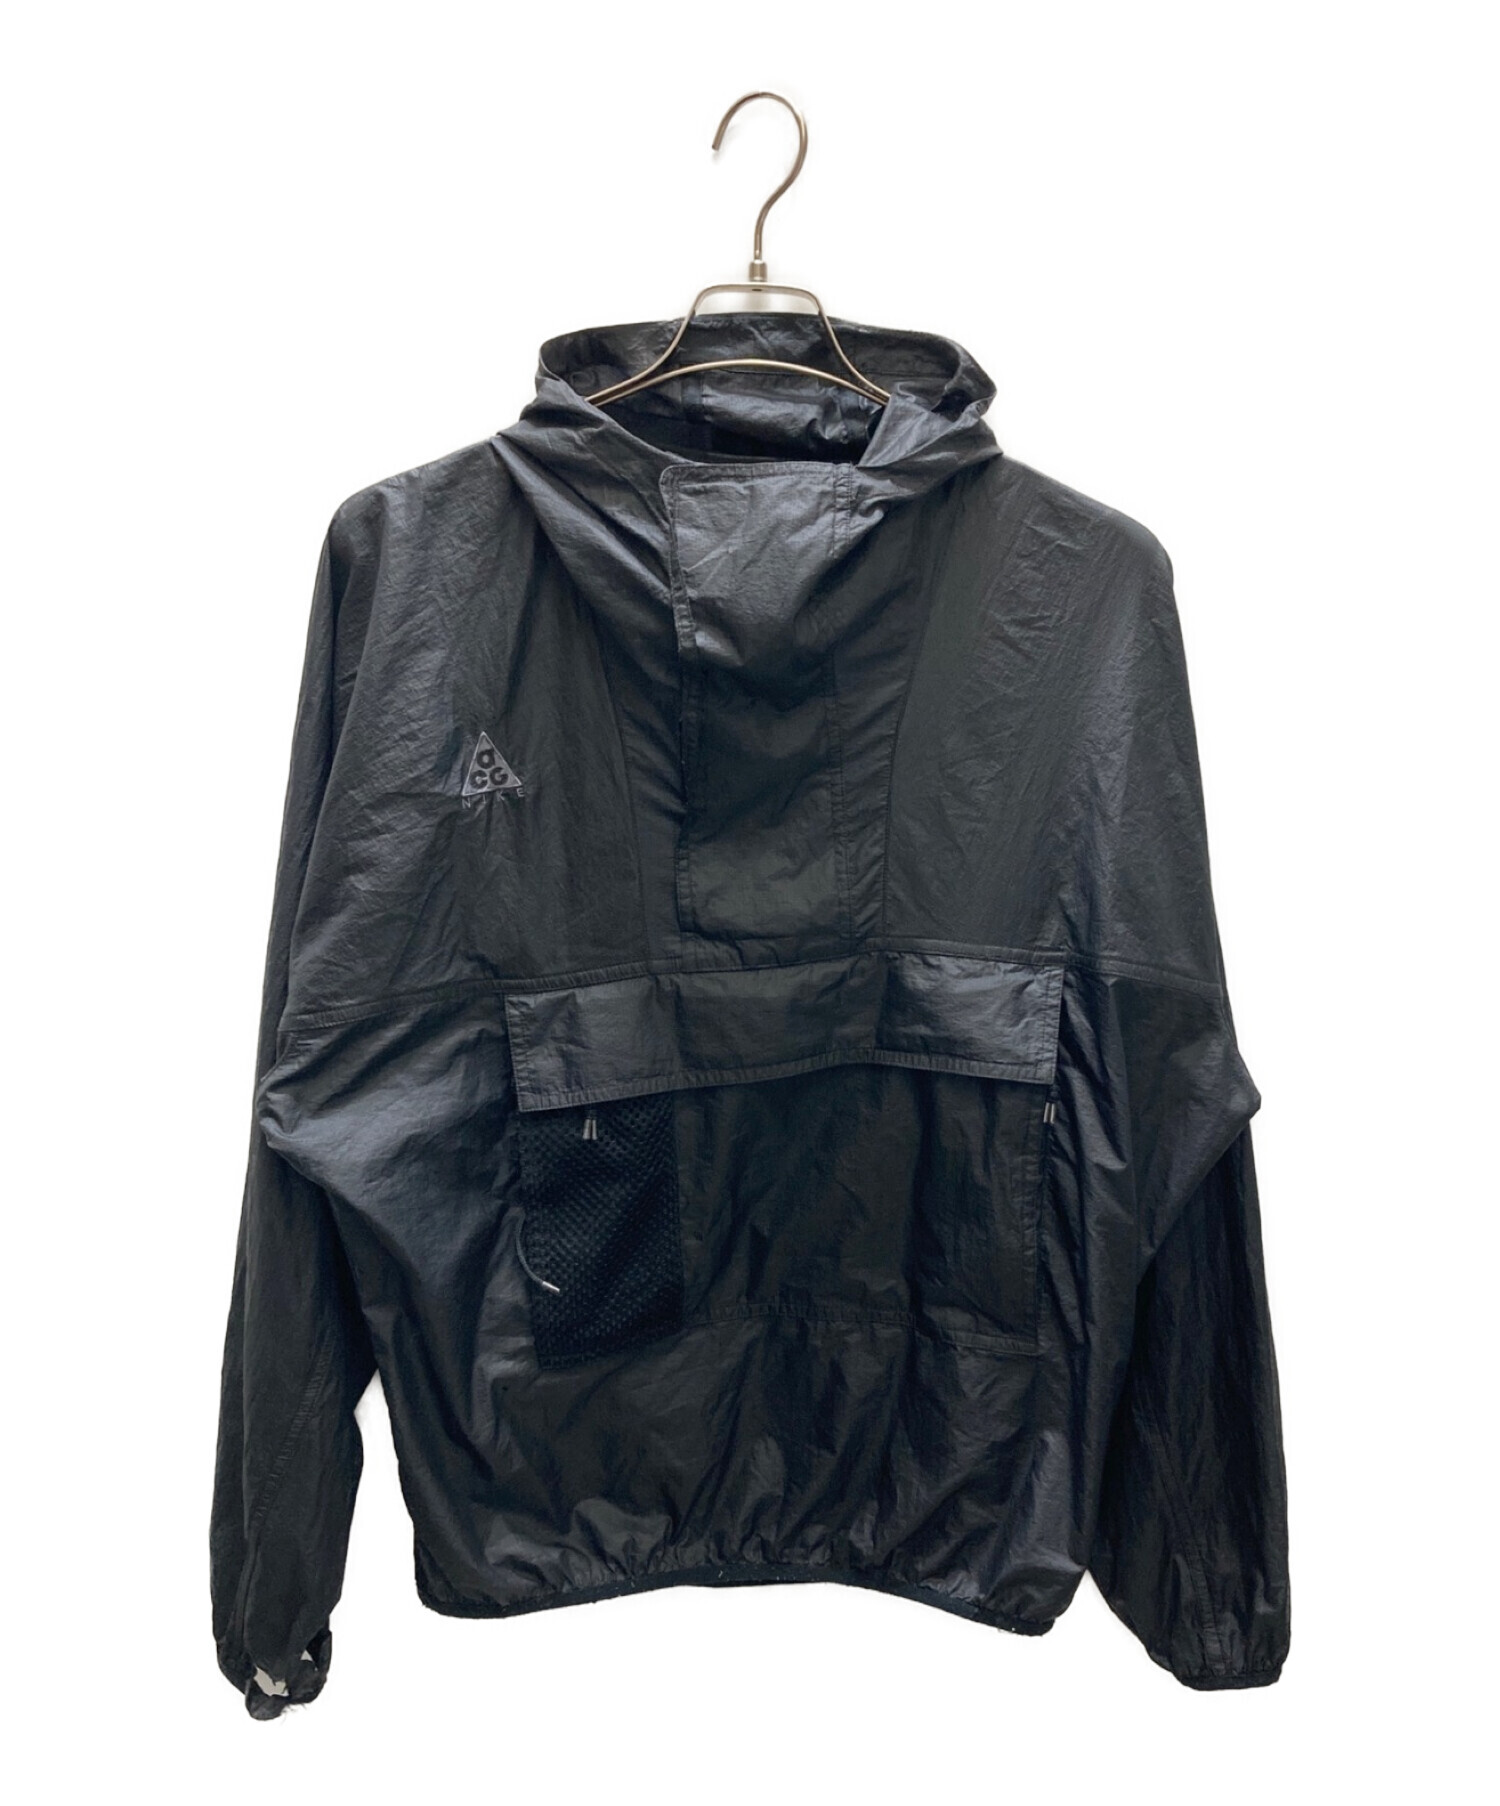 NIKE ACG (ナイキエージーシー) アノラックフーデッドジャケット/ ANORAK HOODED JACKET ブラック サイズ:M